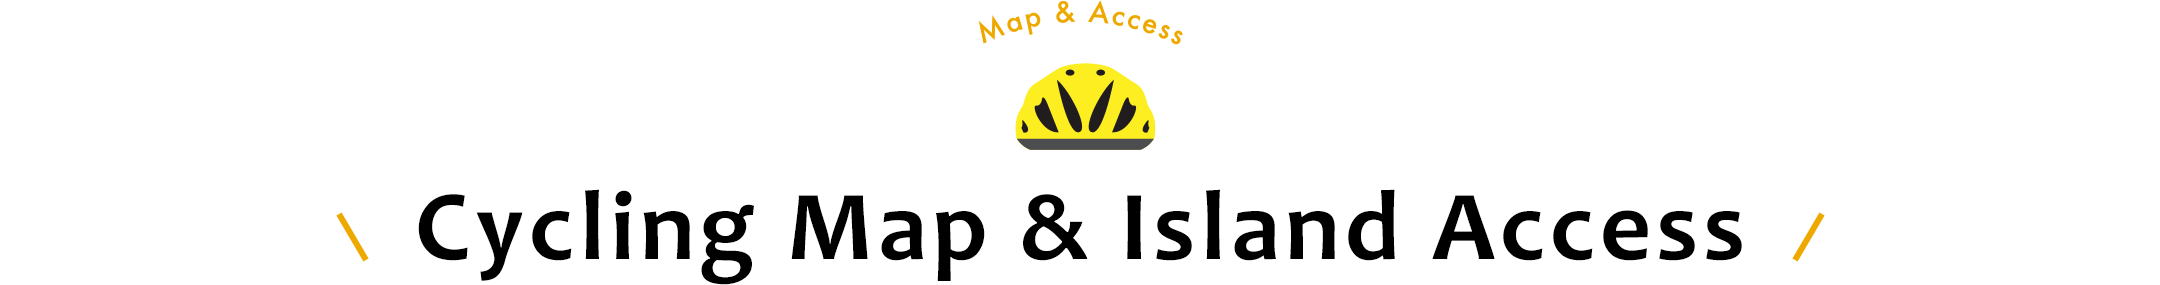 Cycling Map & Island Access